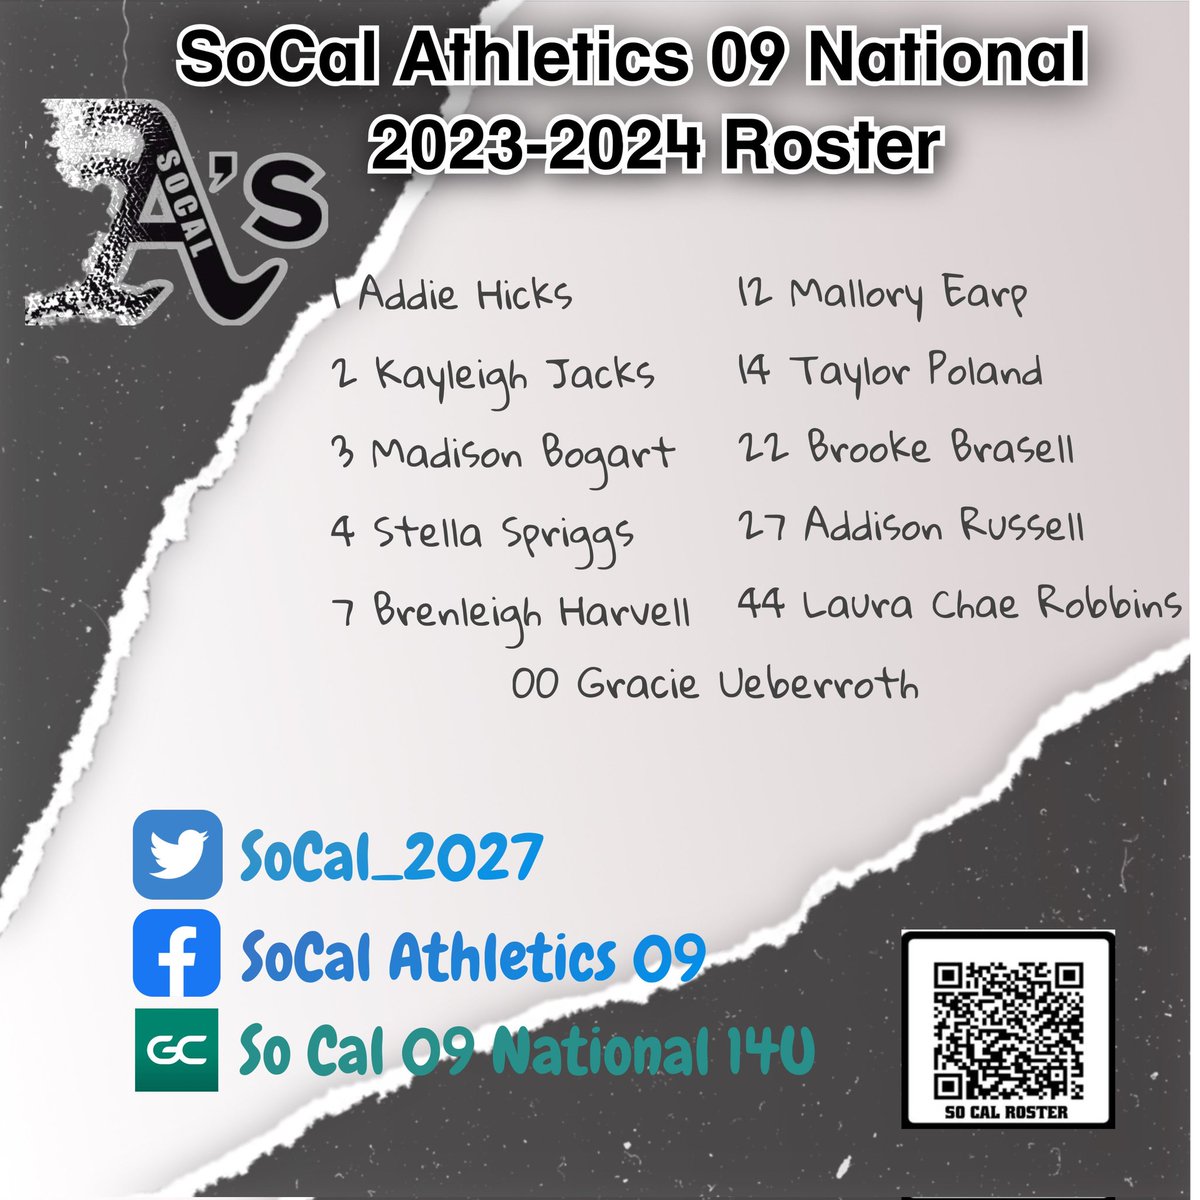 So Cal Athletics Marinakis/Harvell 09 National (@SoCal_2027) on Twitter photo 2023-08-22 01:46:29